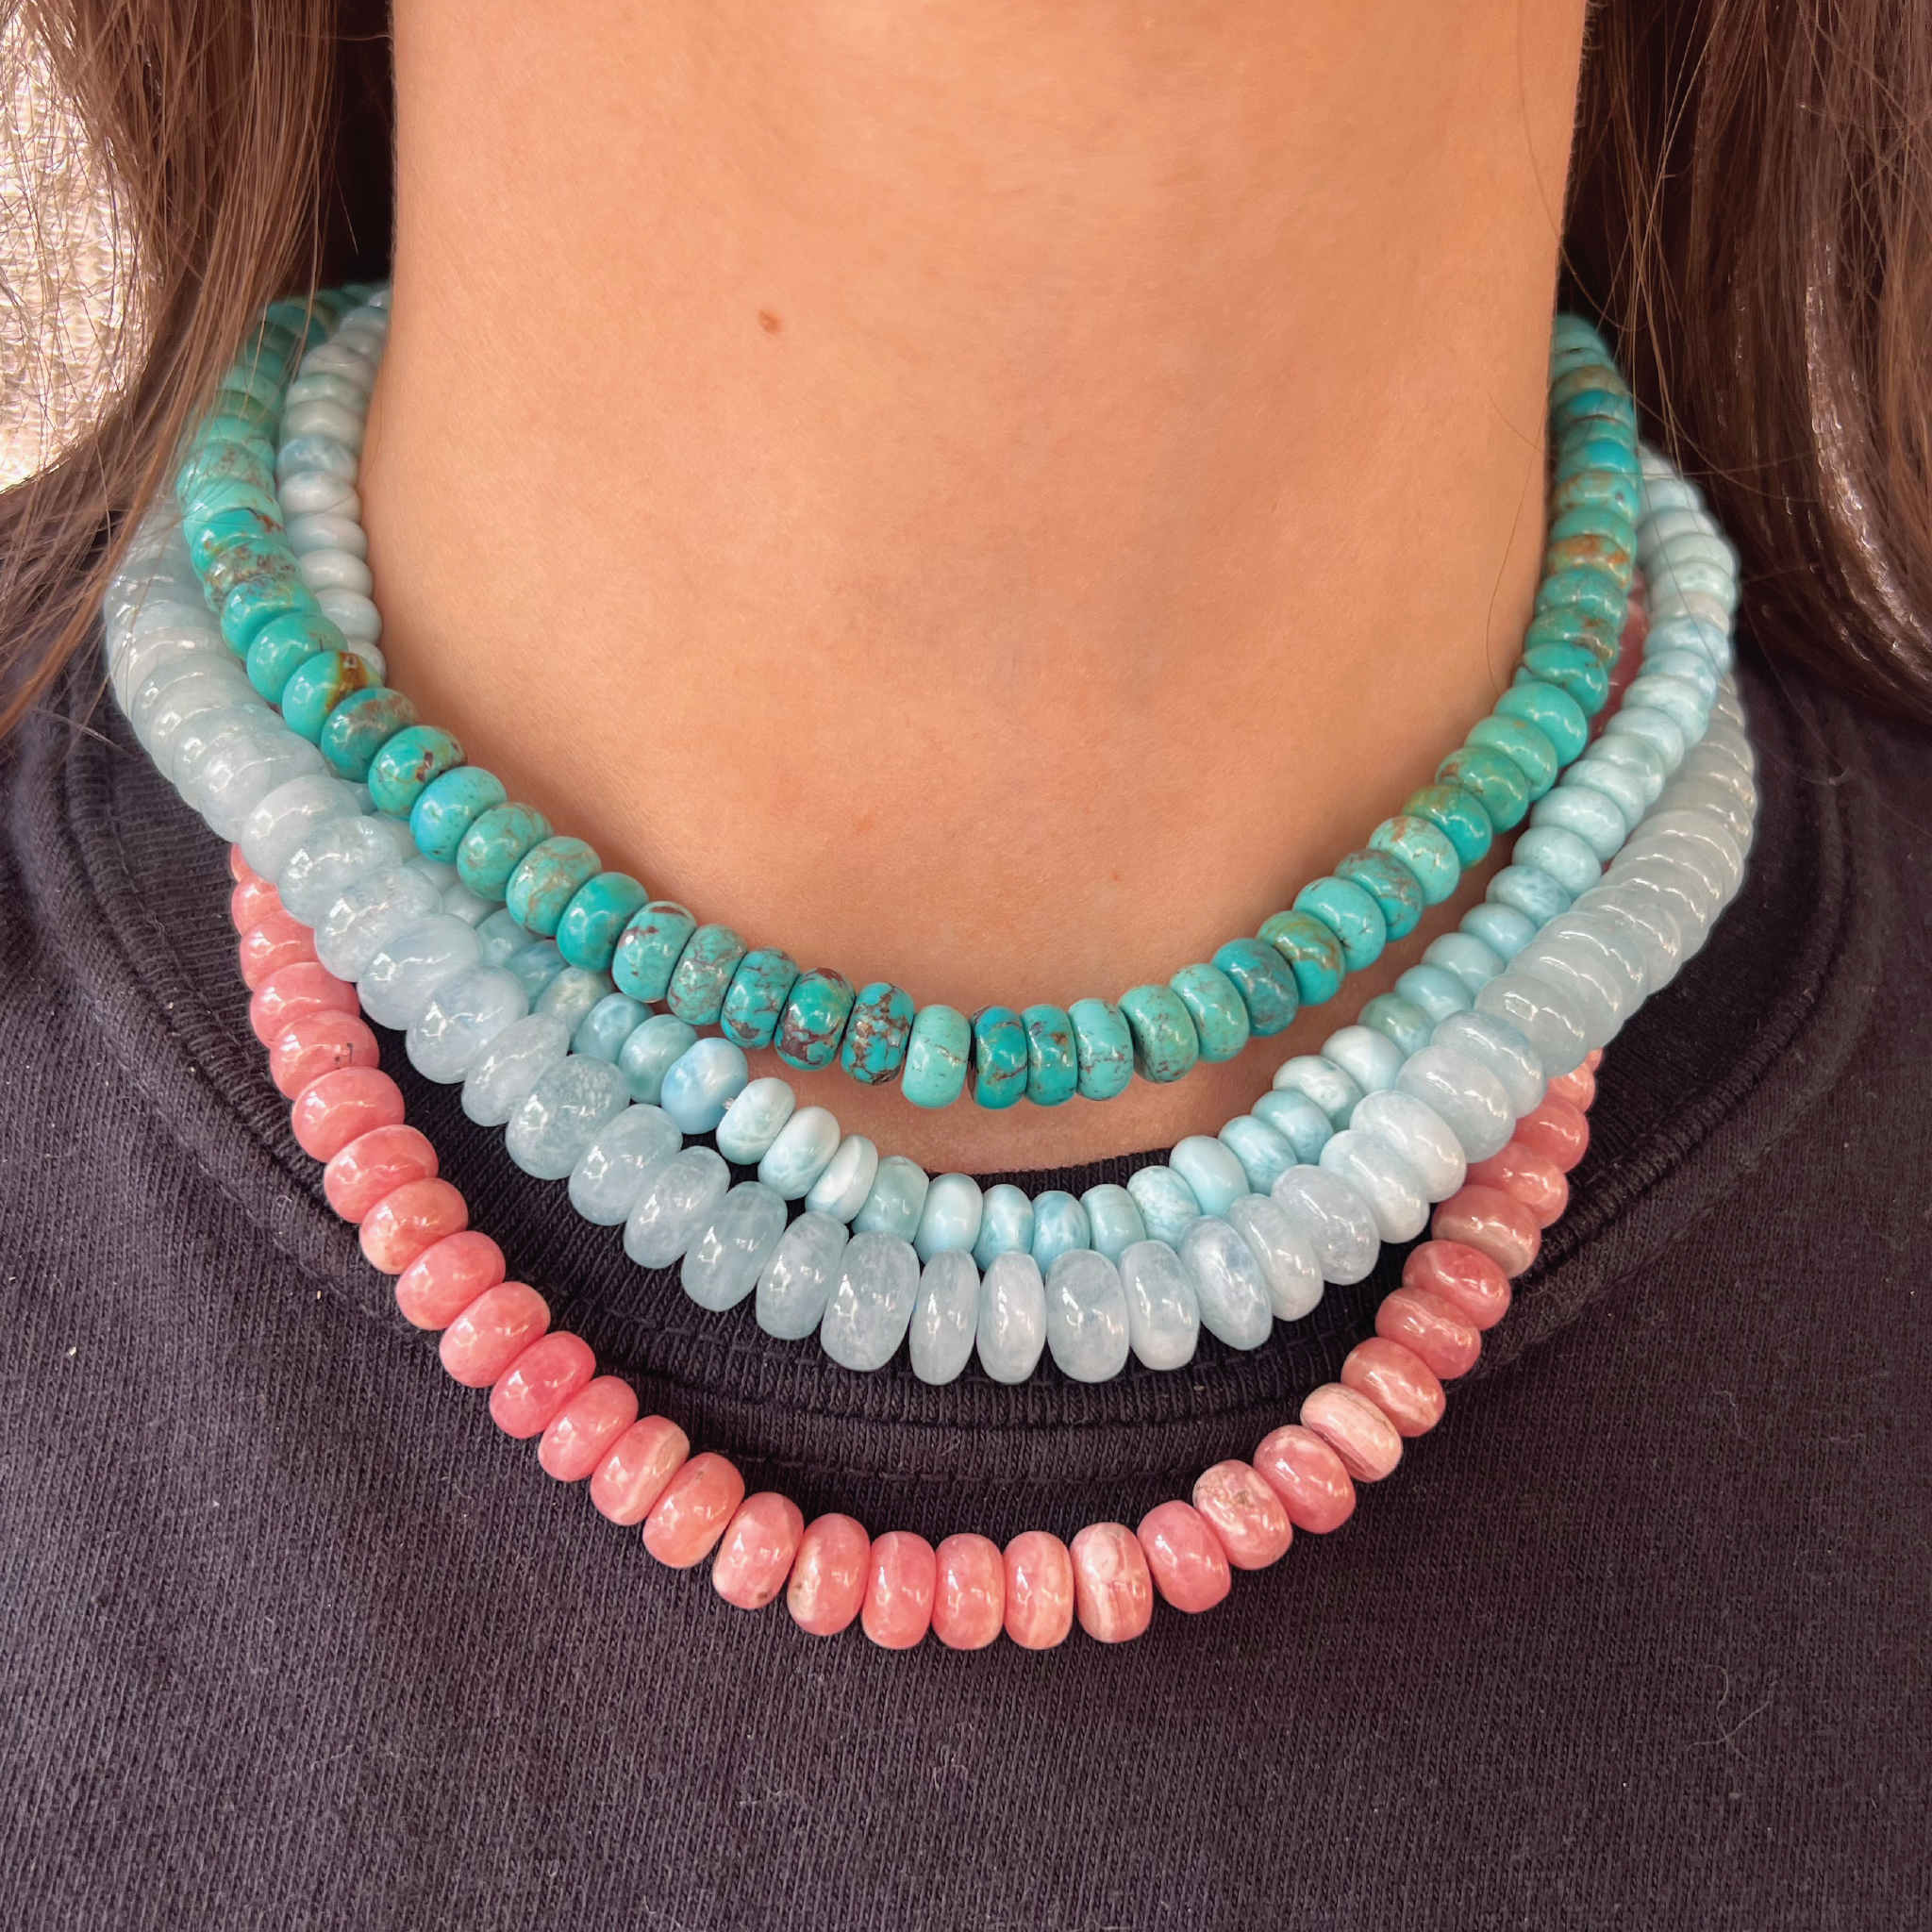 Big Chunky Ball Beads Maxi Choker Collar | Big Necklace Women Jewelry - Big  Chunky - Aliexpress